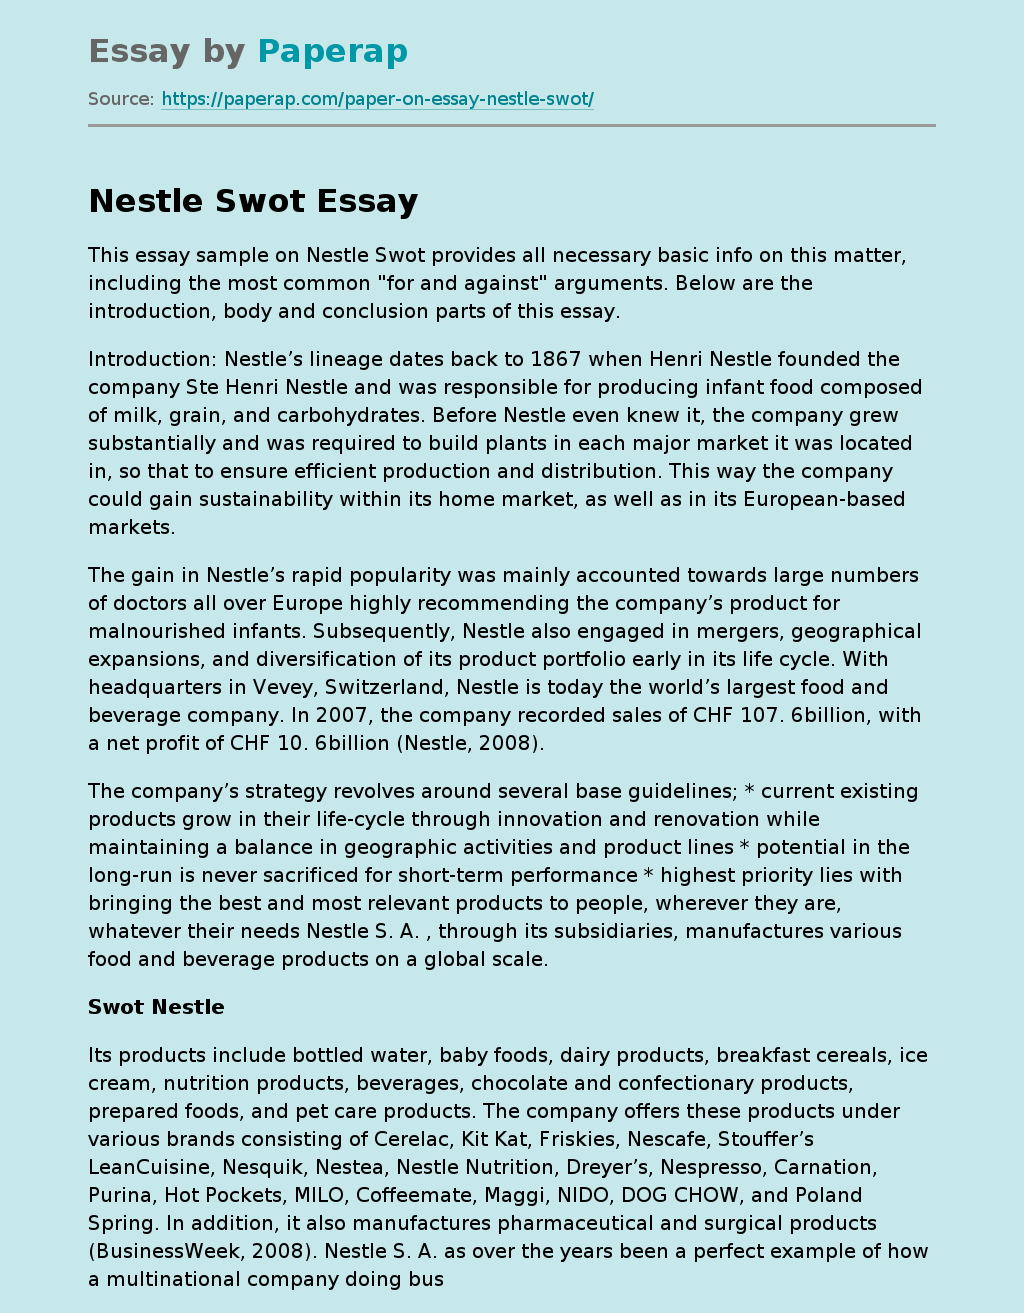 Sample Essay on Nestle SWOT